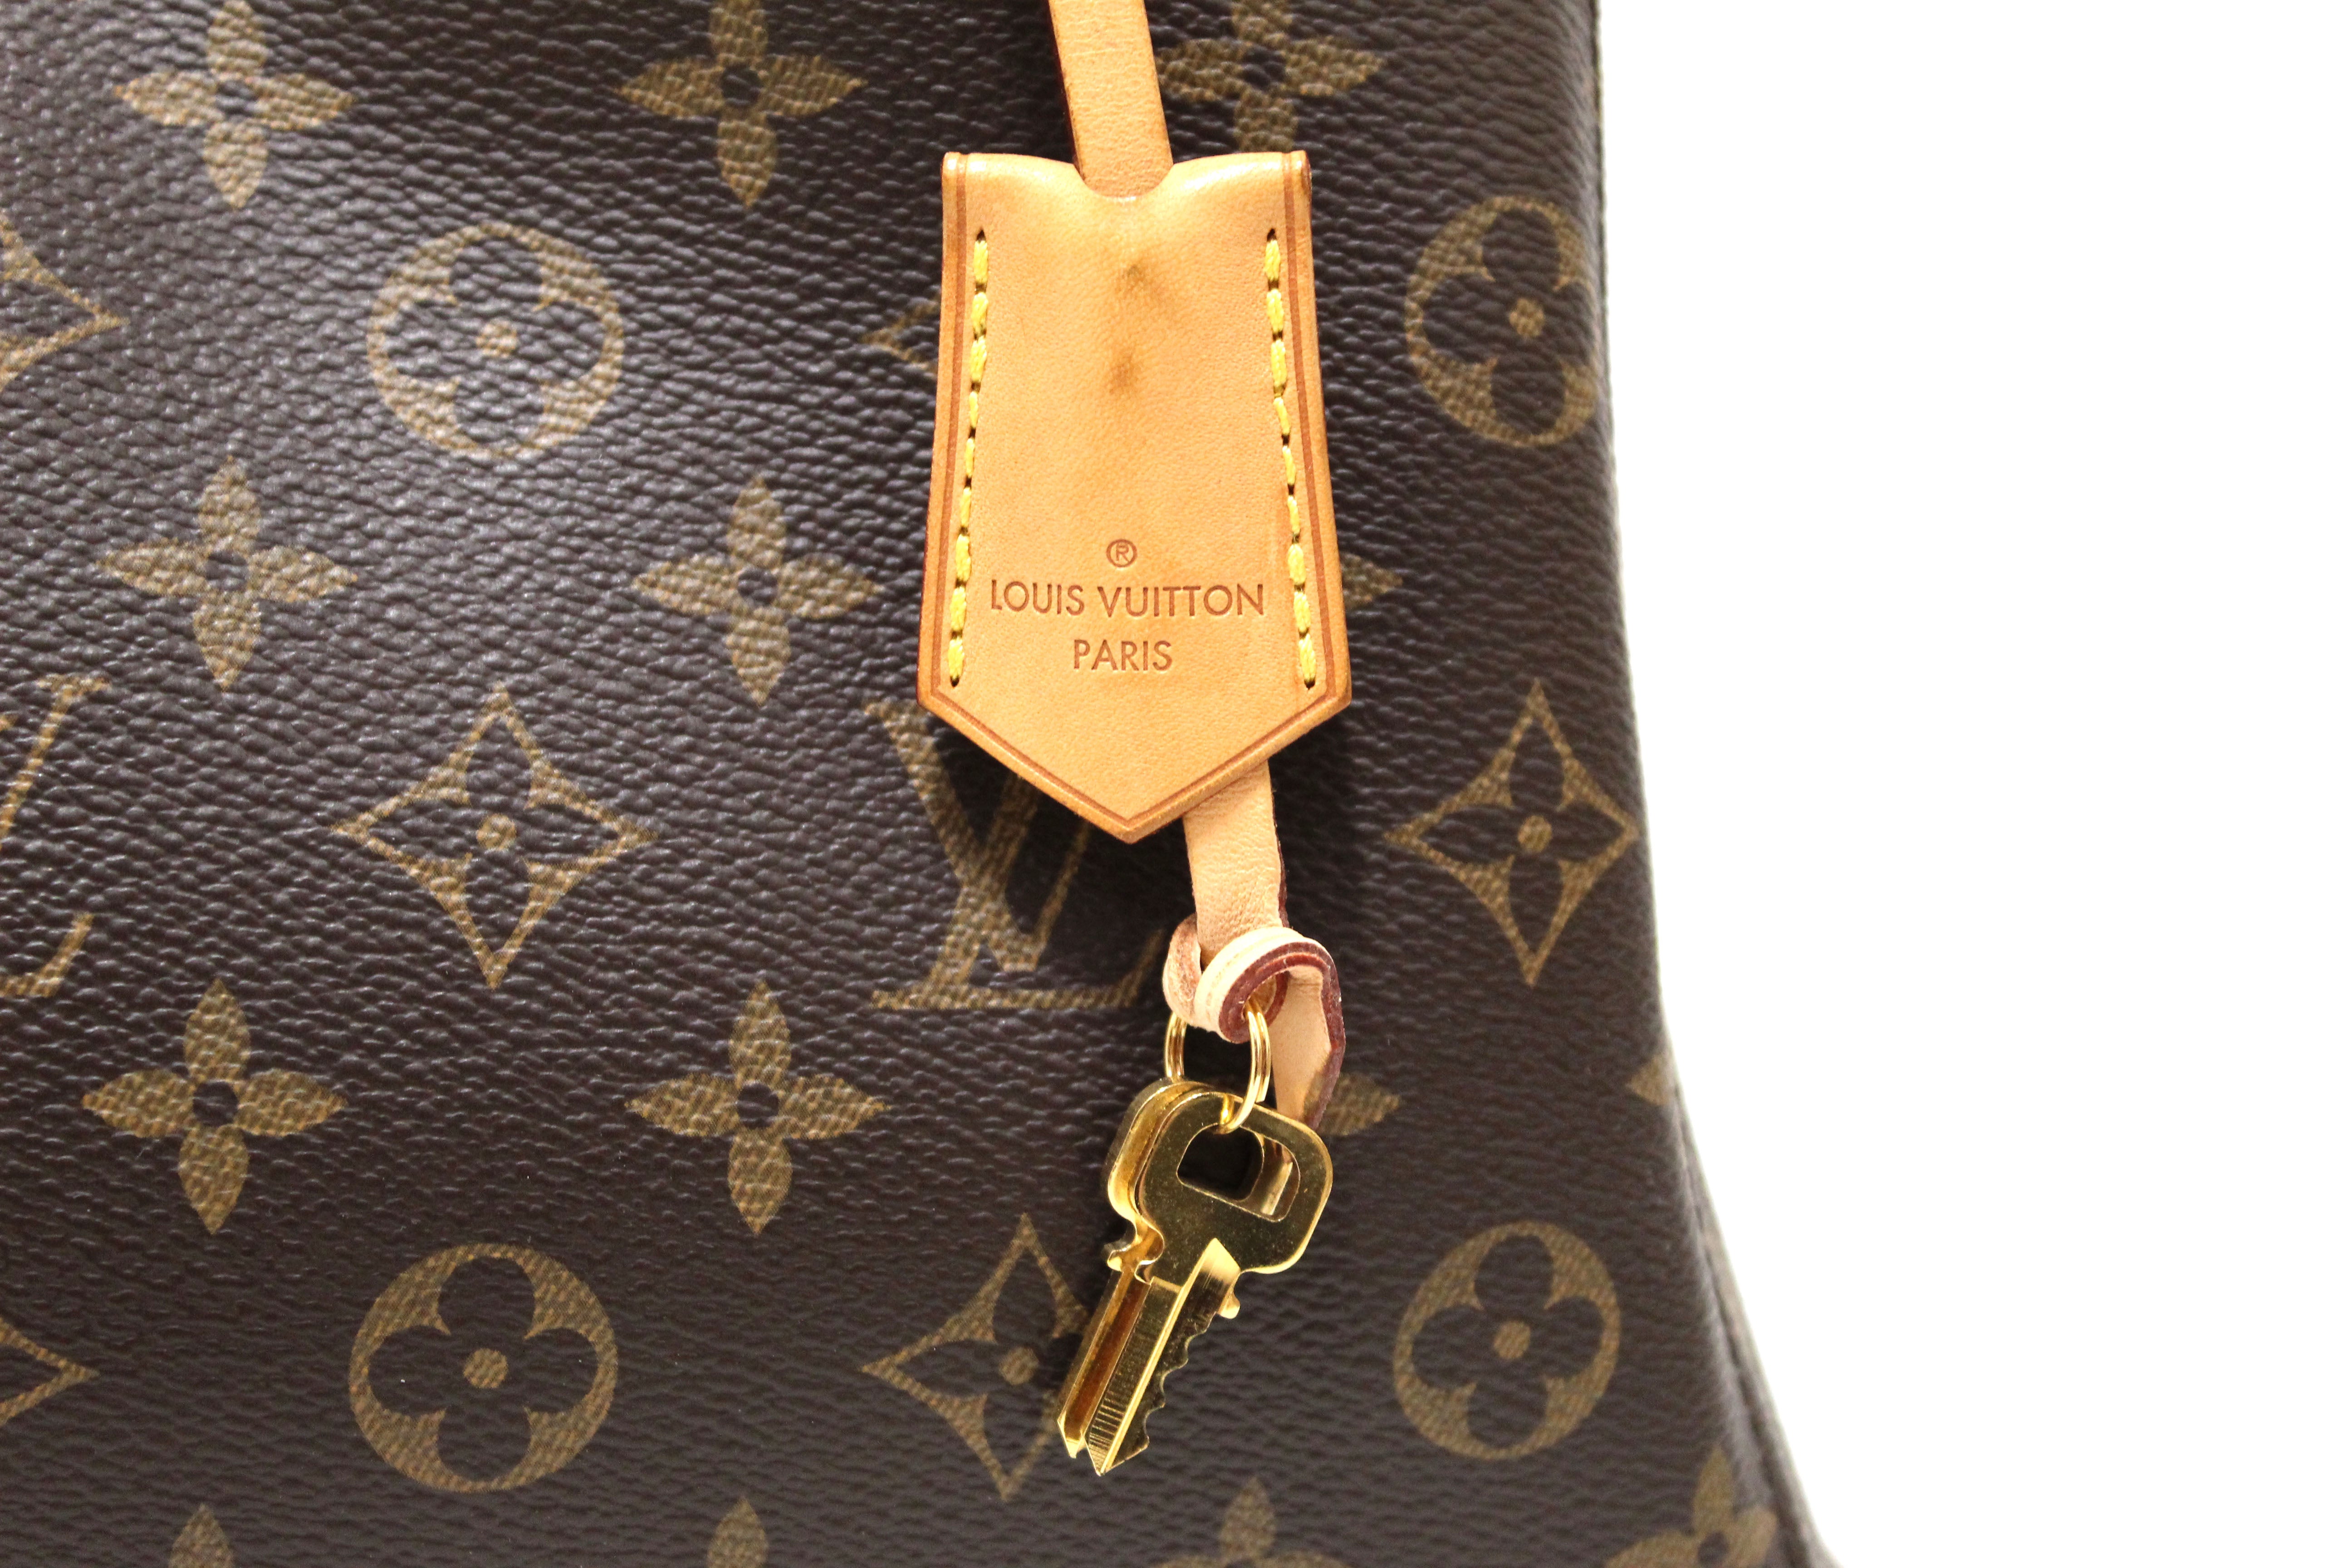 Authentic Louis Vuitton Classic Monogram Montaigne MM Handbag